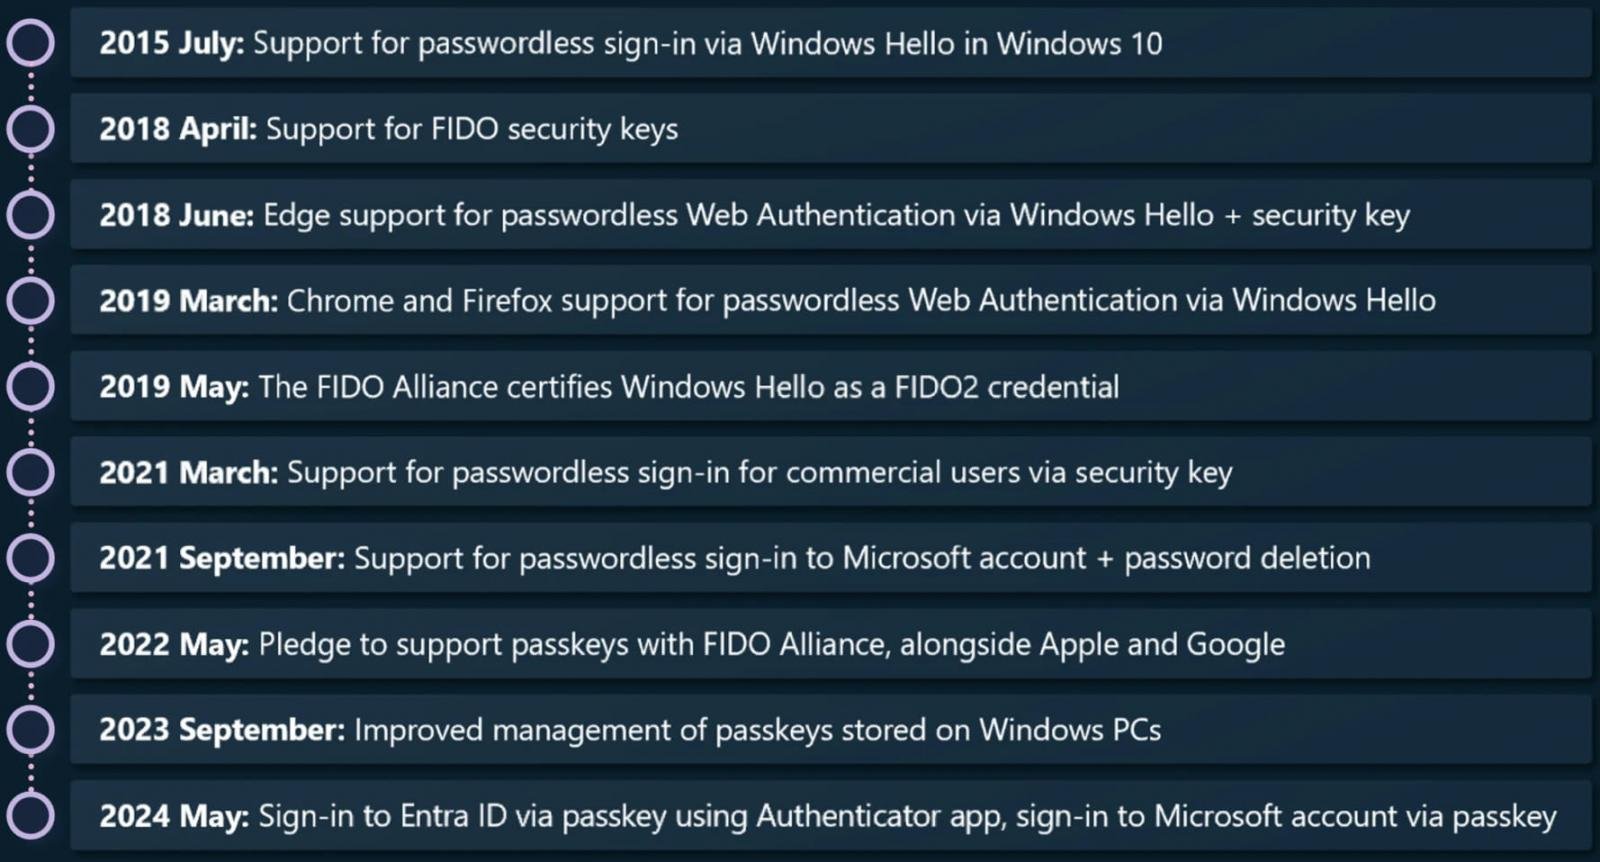 Microsoft's steps towards password-less authentication